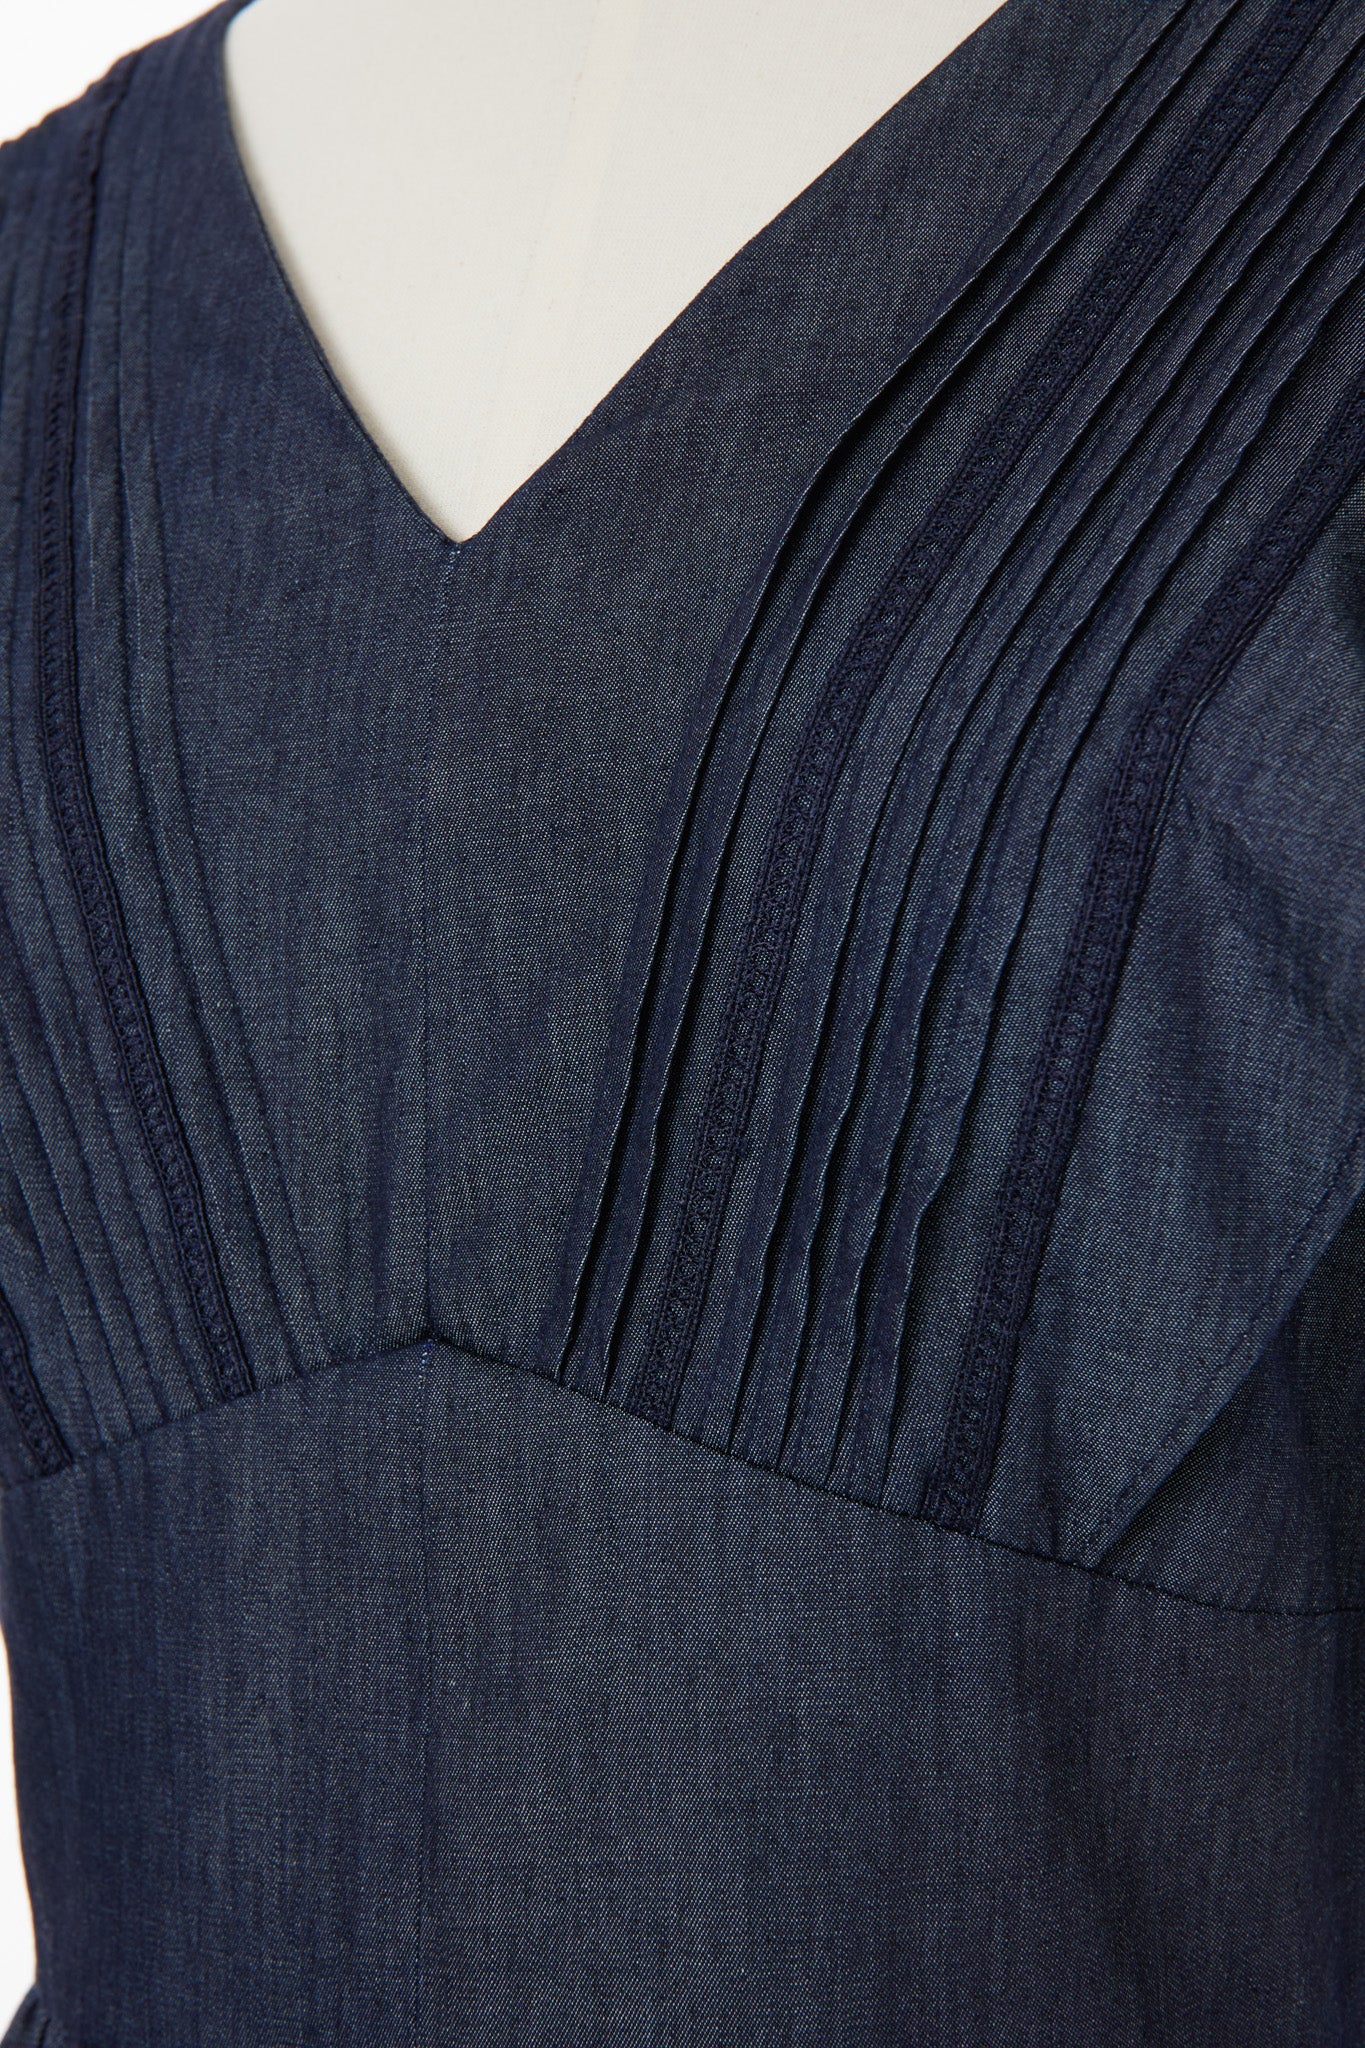 Eternal Lace Trimmed Dress 送料込みです | sweetroom-ebisu.jp